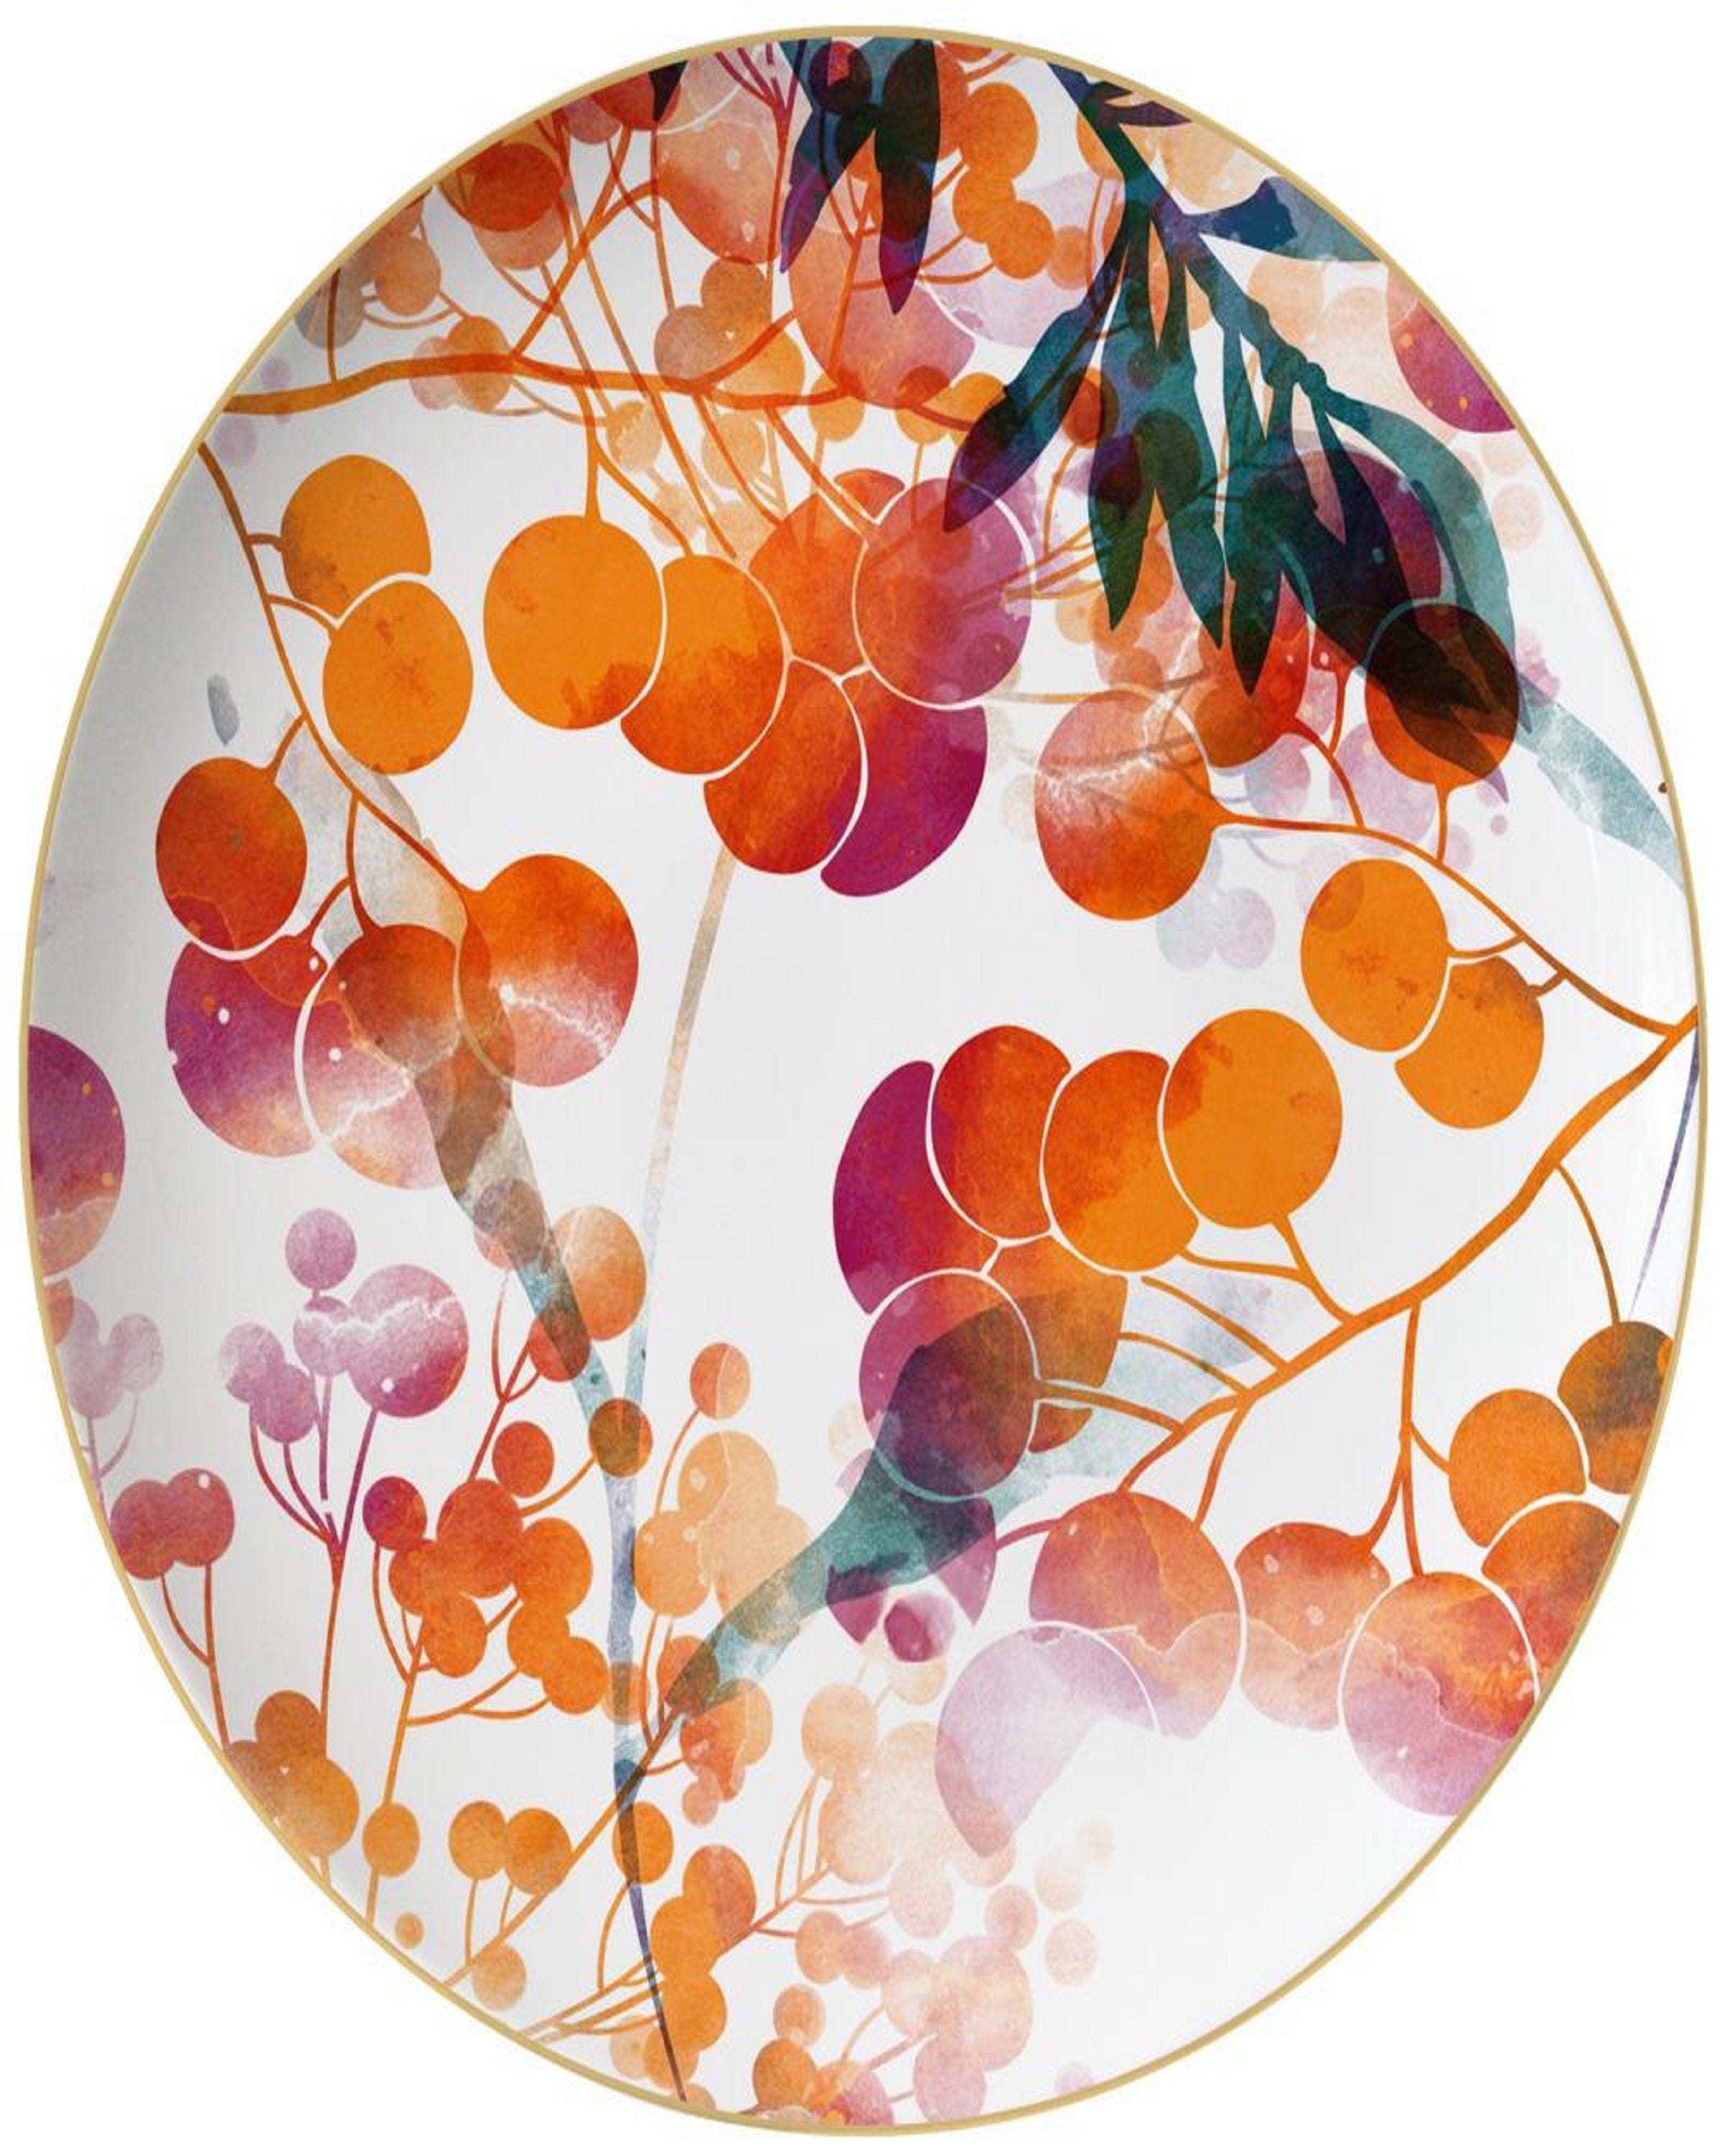 Buy Colorful Ceramic Dinner Plates